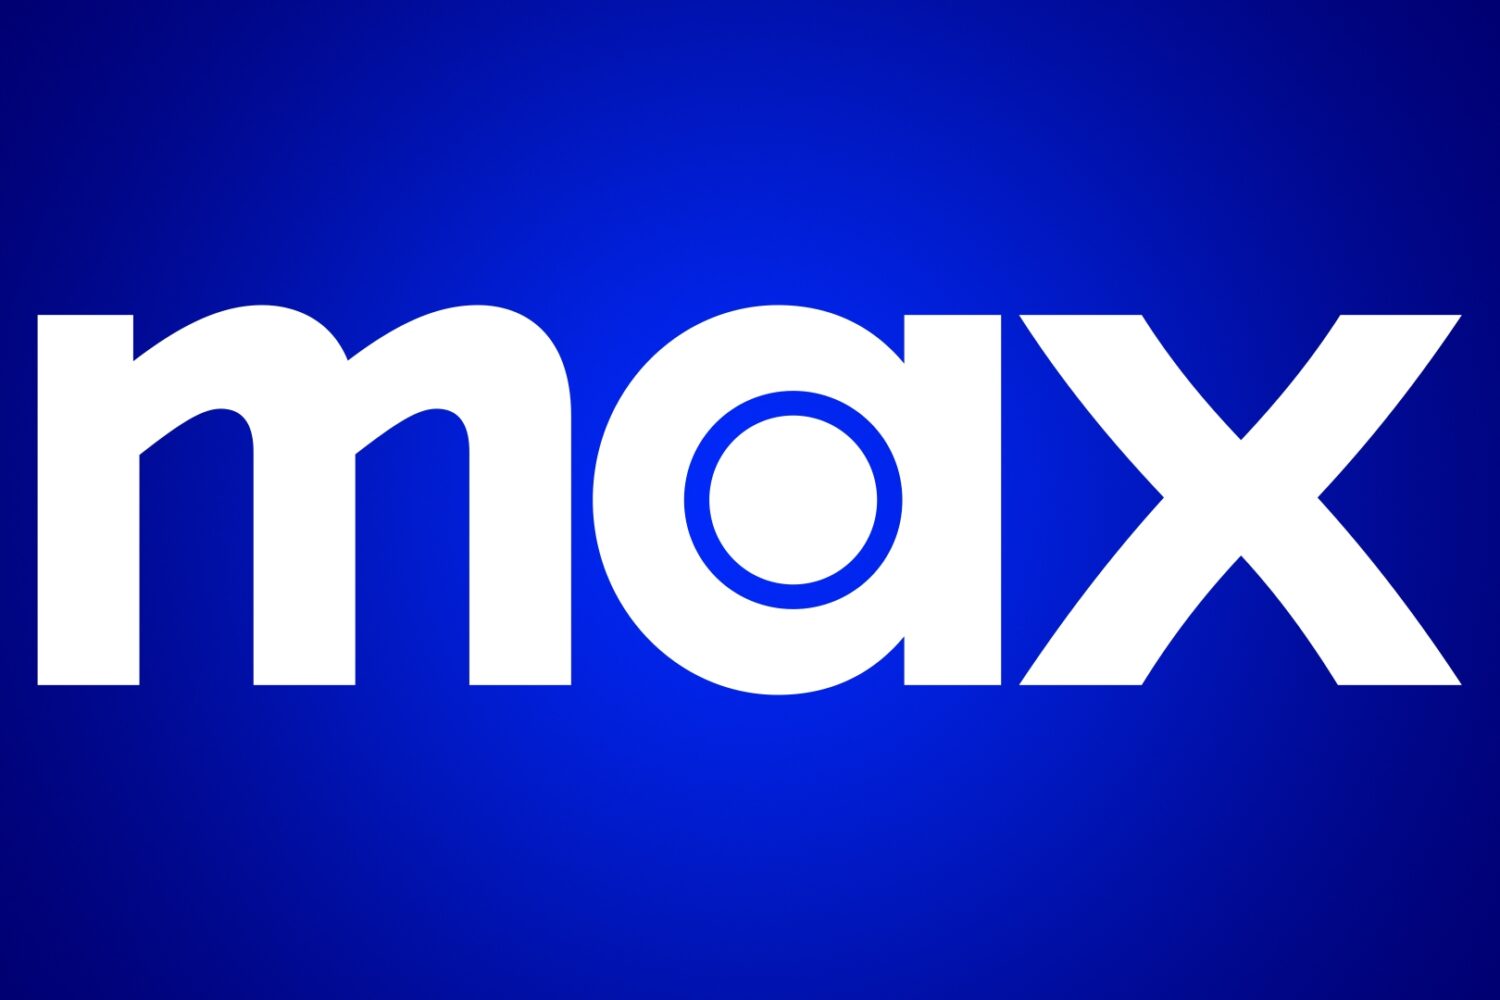 White Max streaming app logo set against a dark blue gradient background